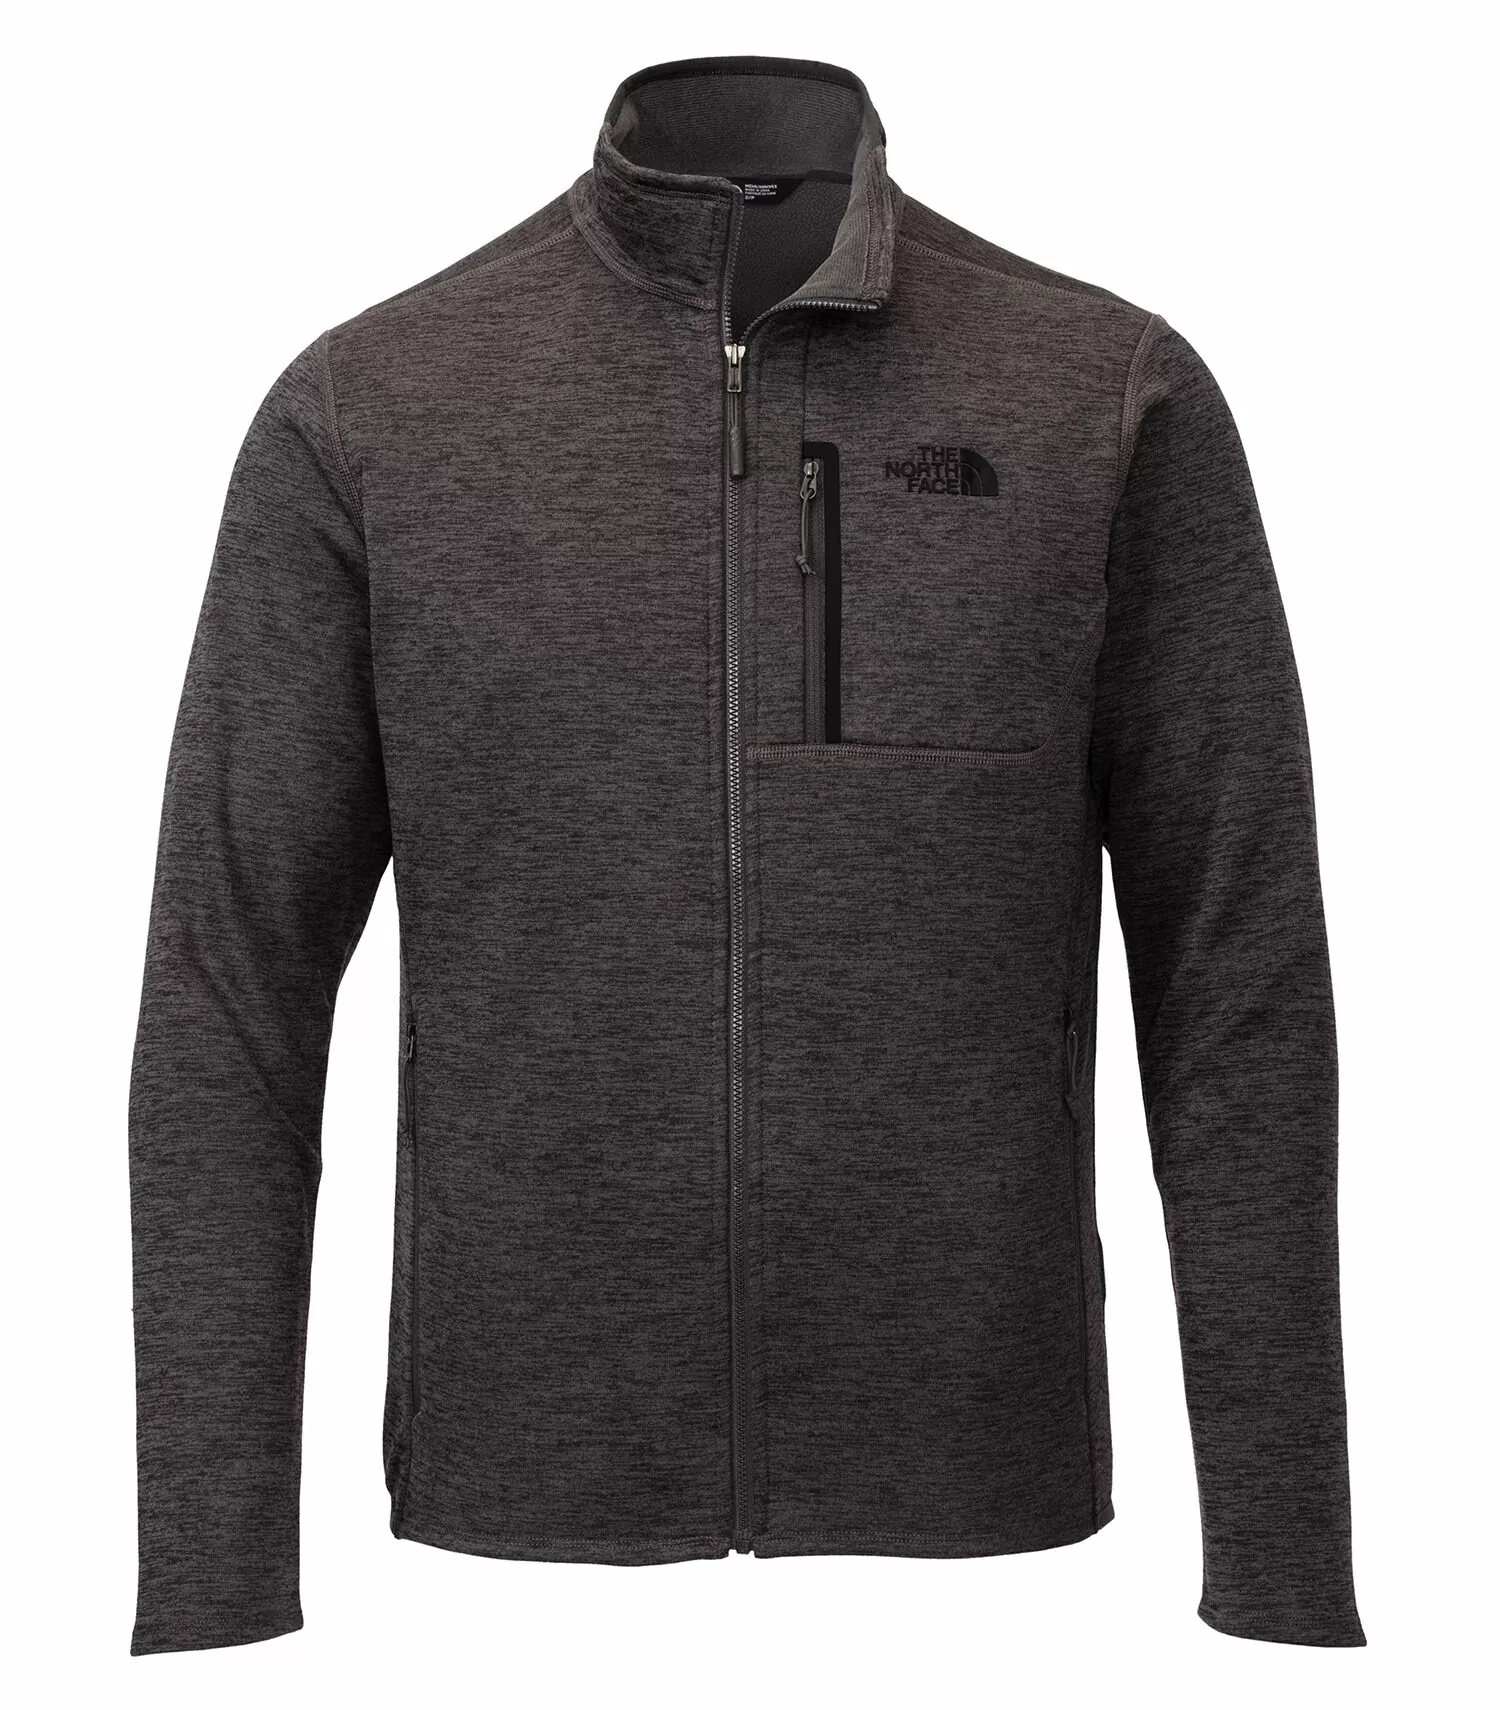 The North Face® Skyline Fleece Full Zip Jacket - Xpromo.ca